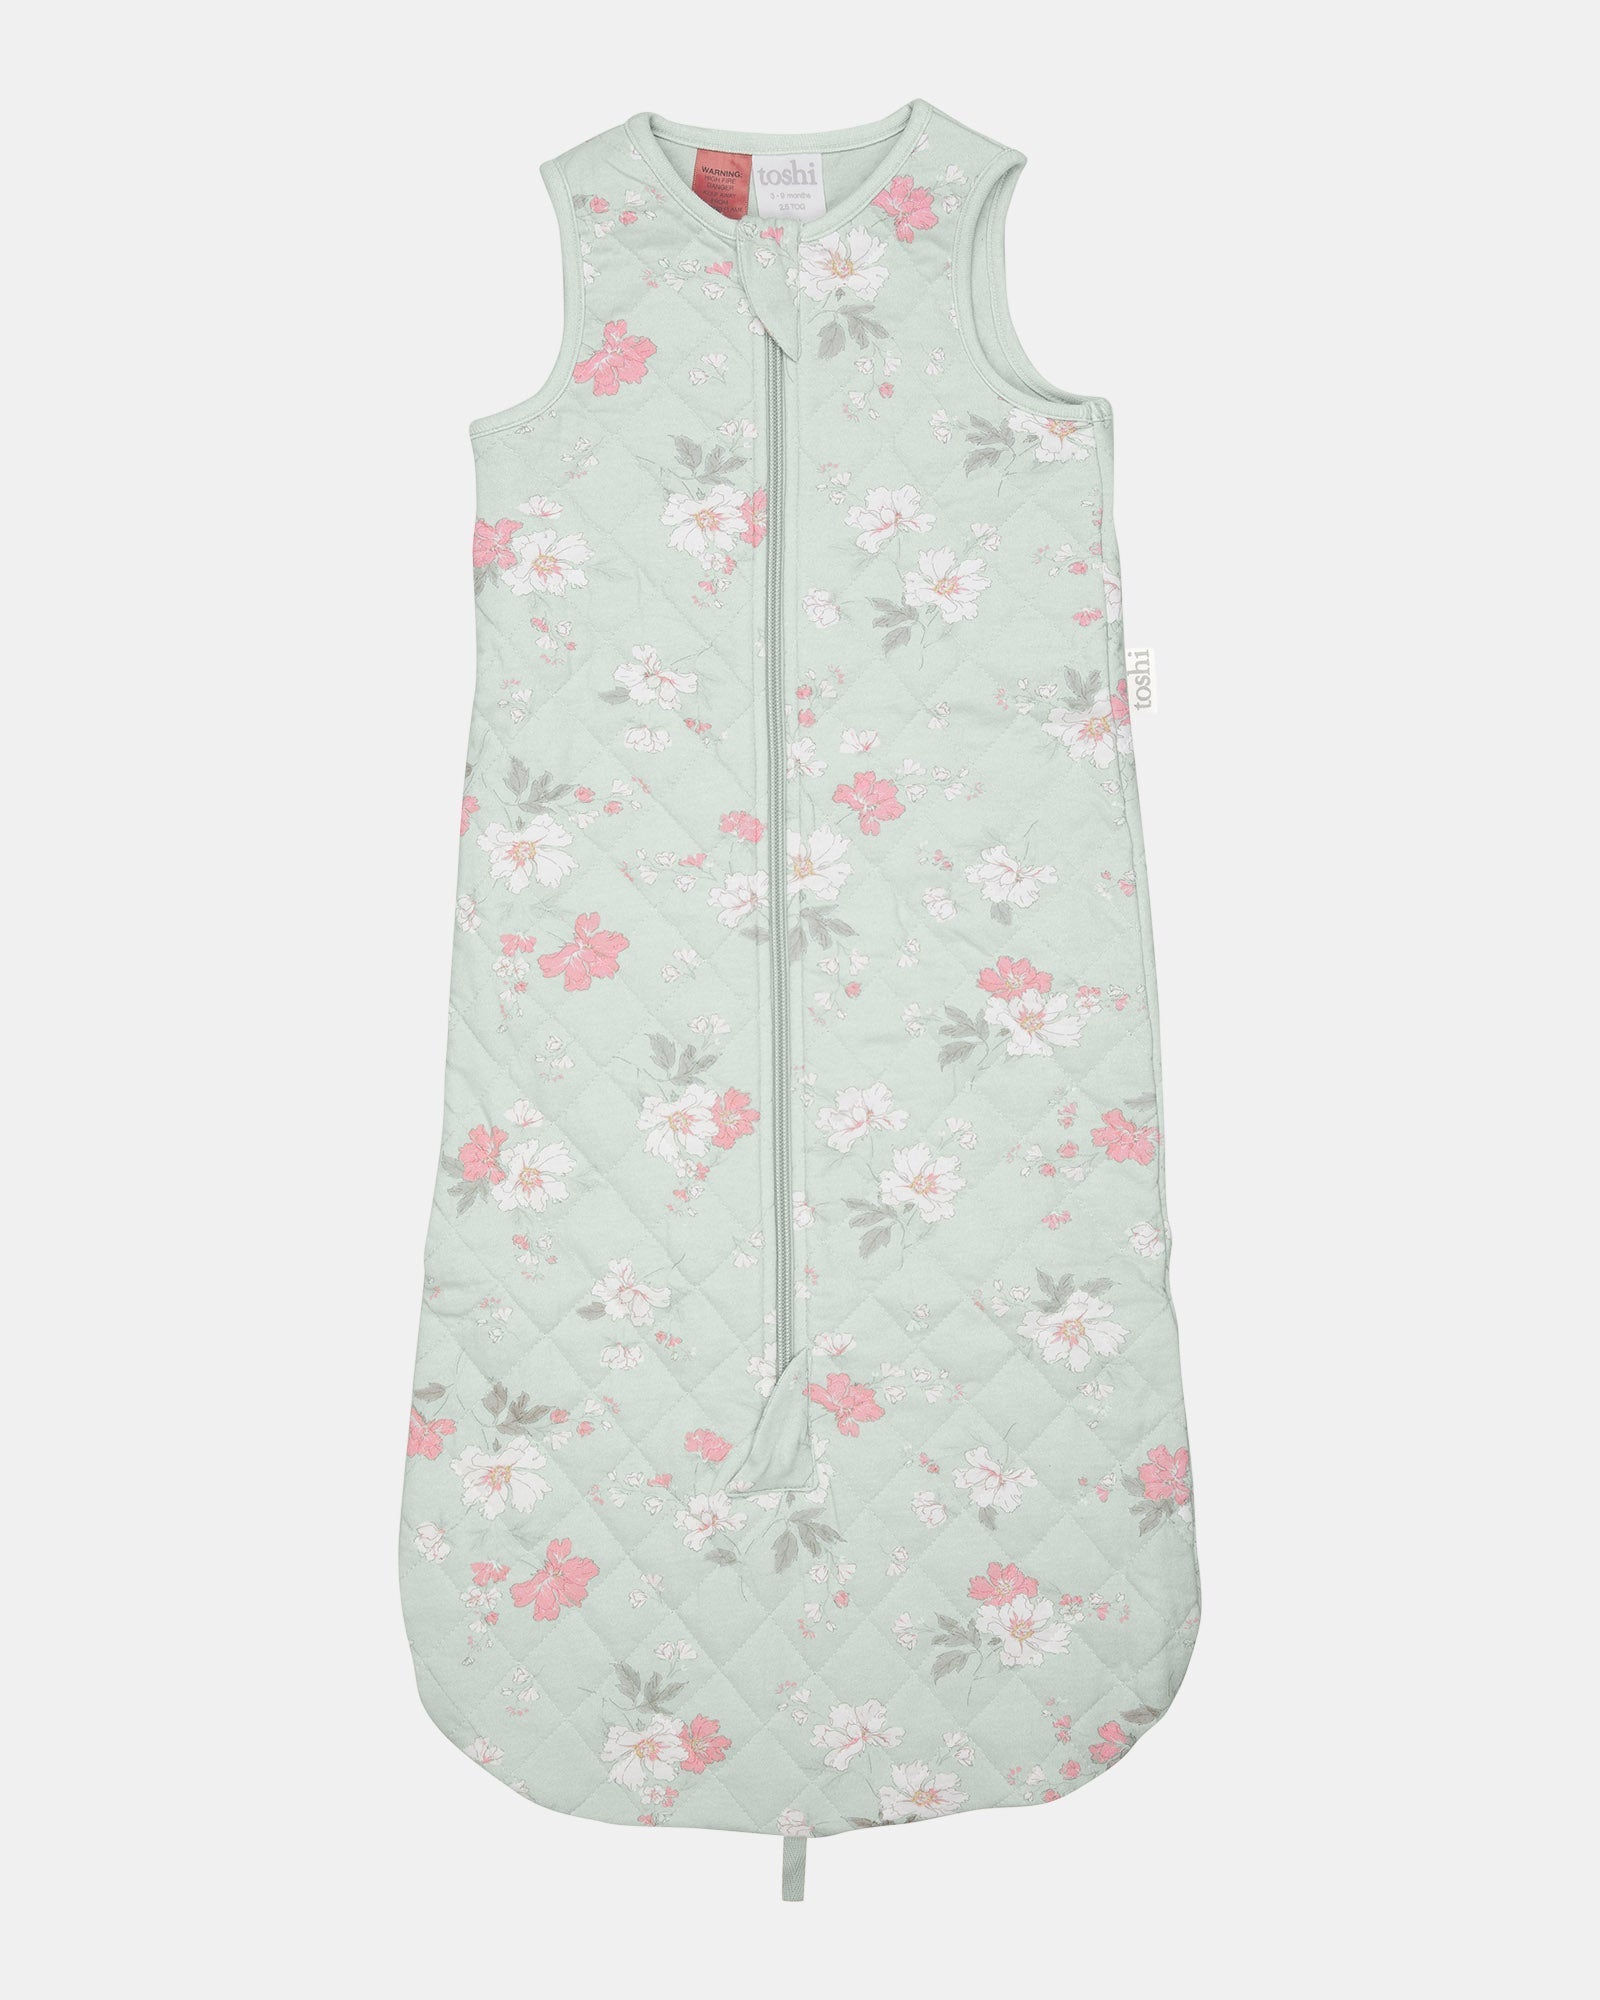 Baby Sleep Bag Classic Sleeveless 1 TOG - Priscilla-Nursery & Nurture-Toshi-The Bay Room